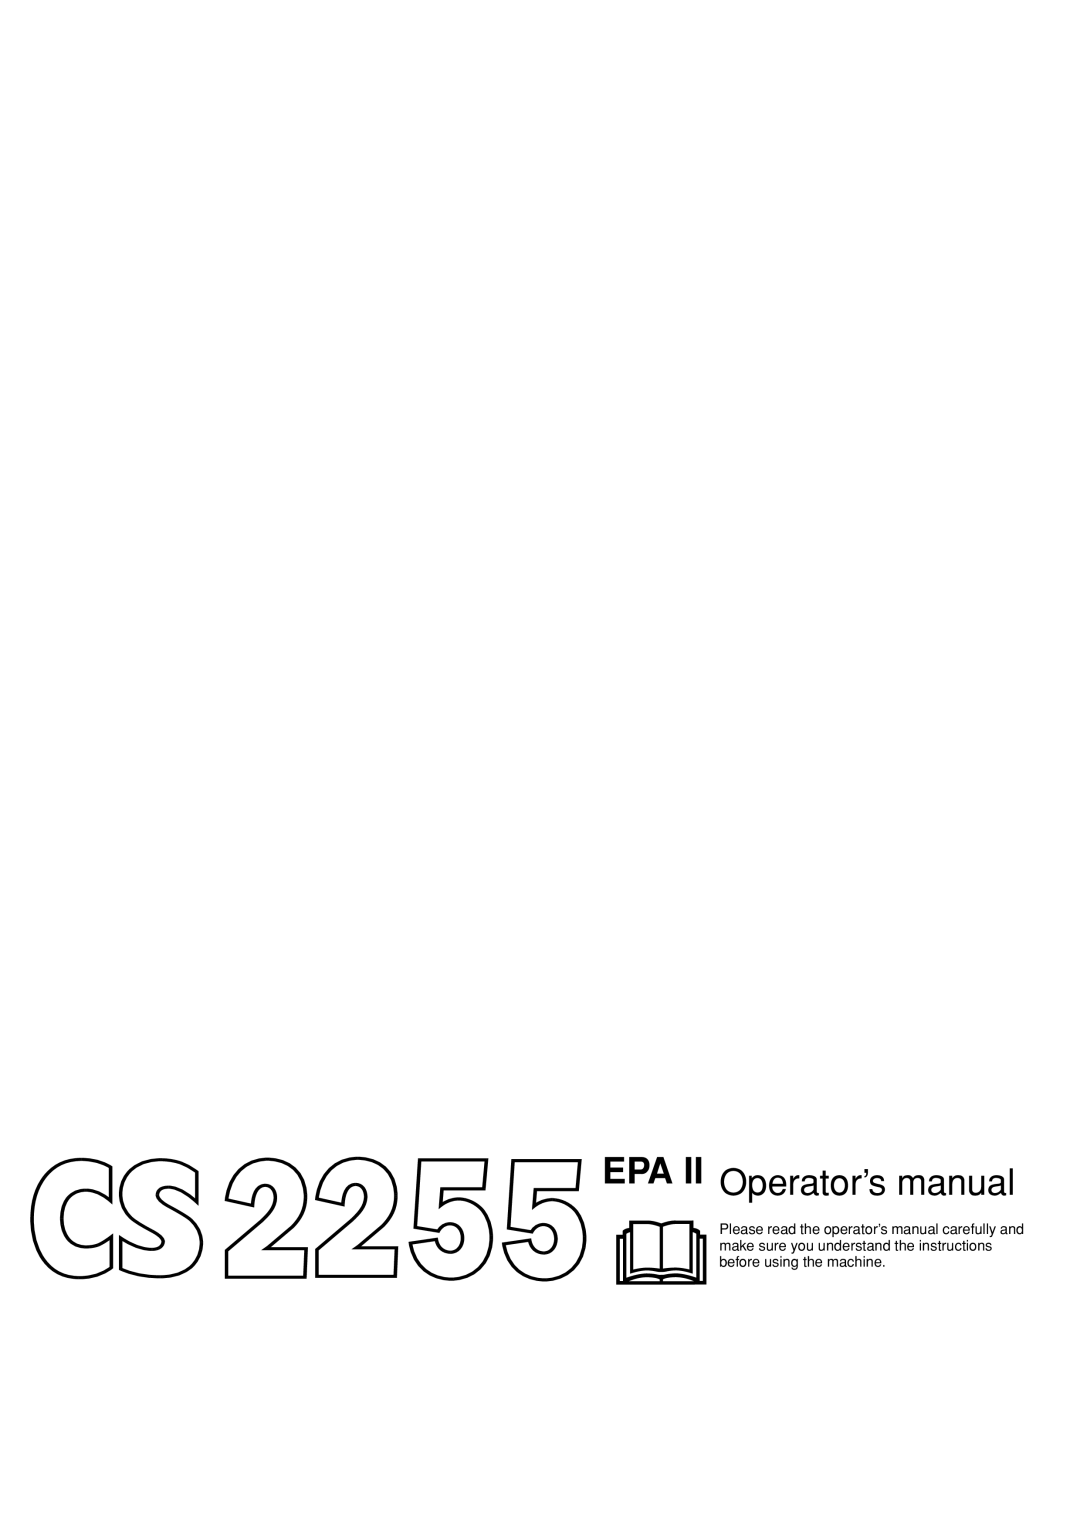 Jonsered CS 2255 manual EPA II Operator’s manual 